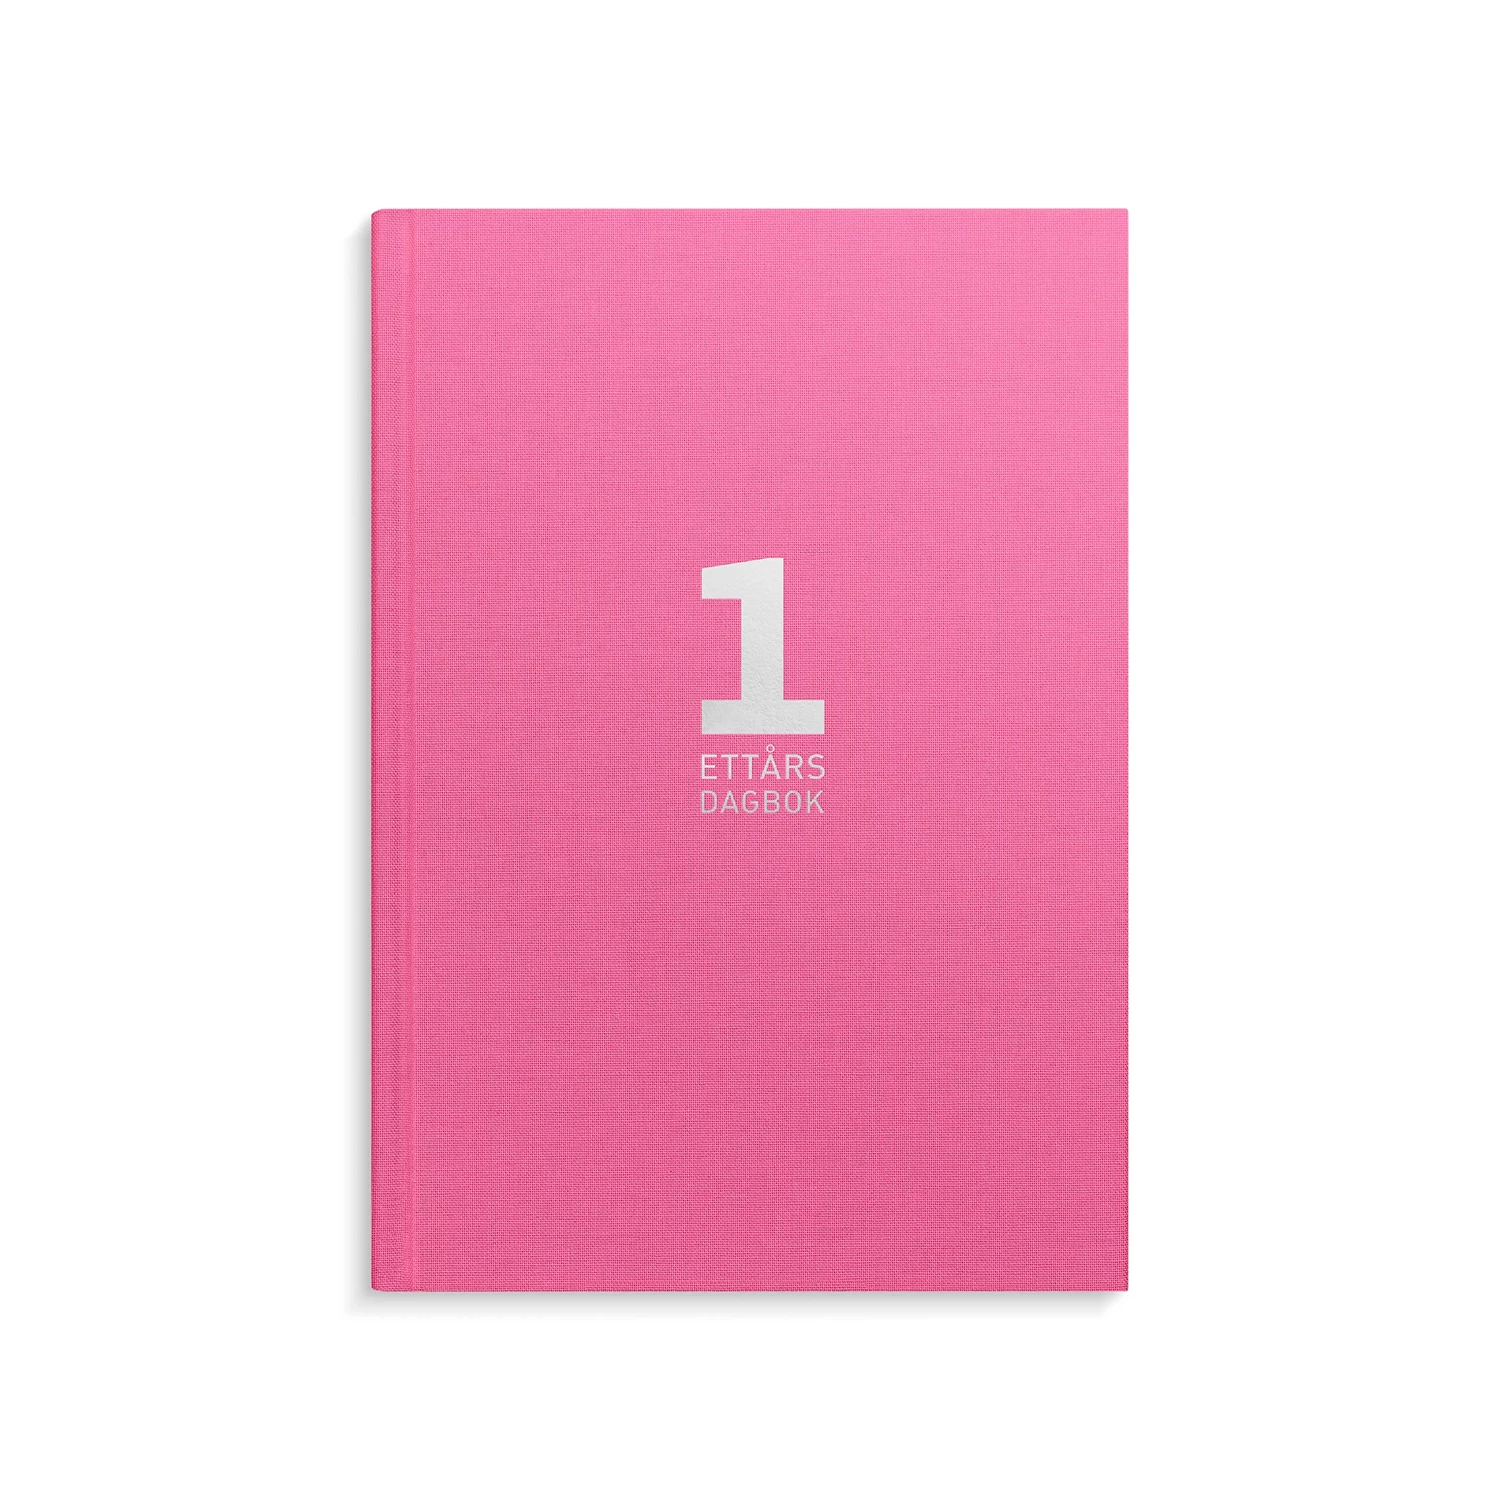 1-årsdagbok rosa linnetextil